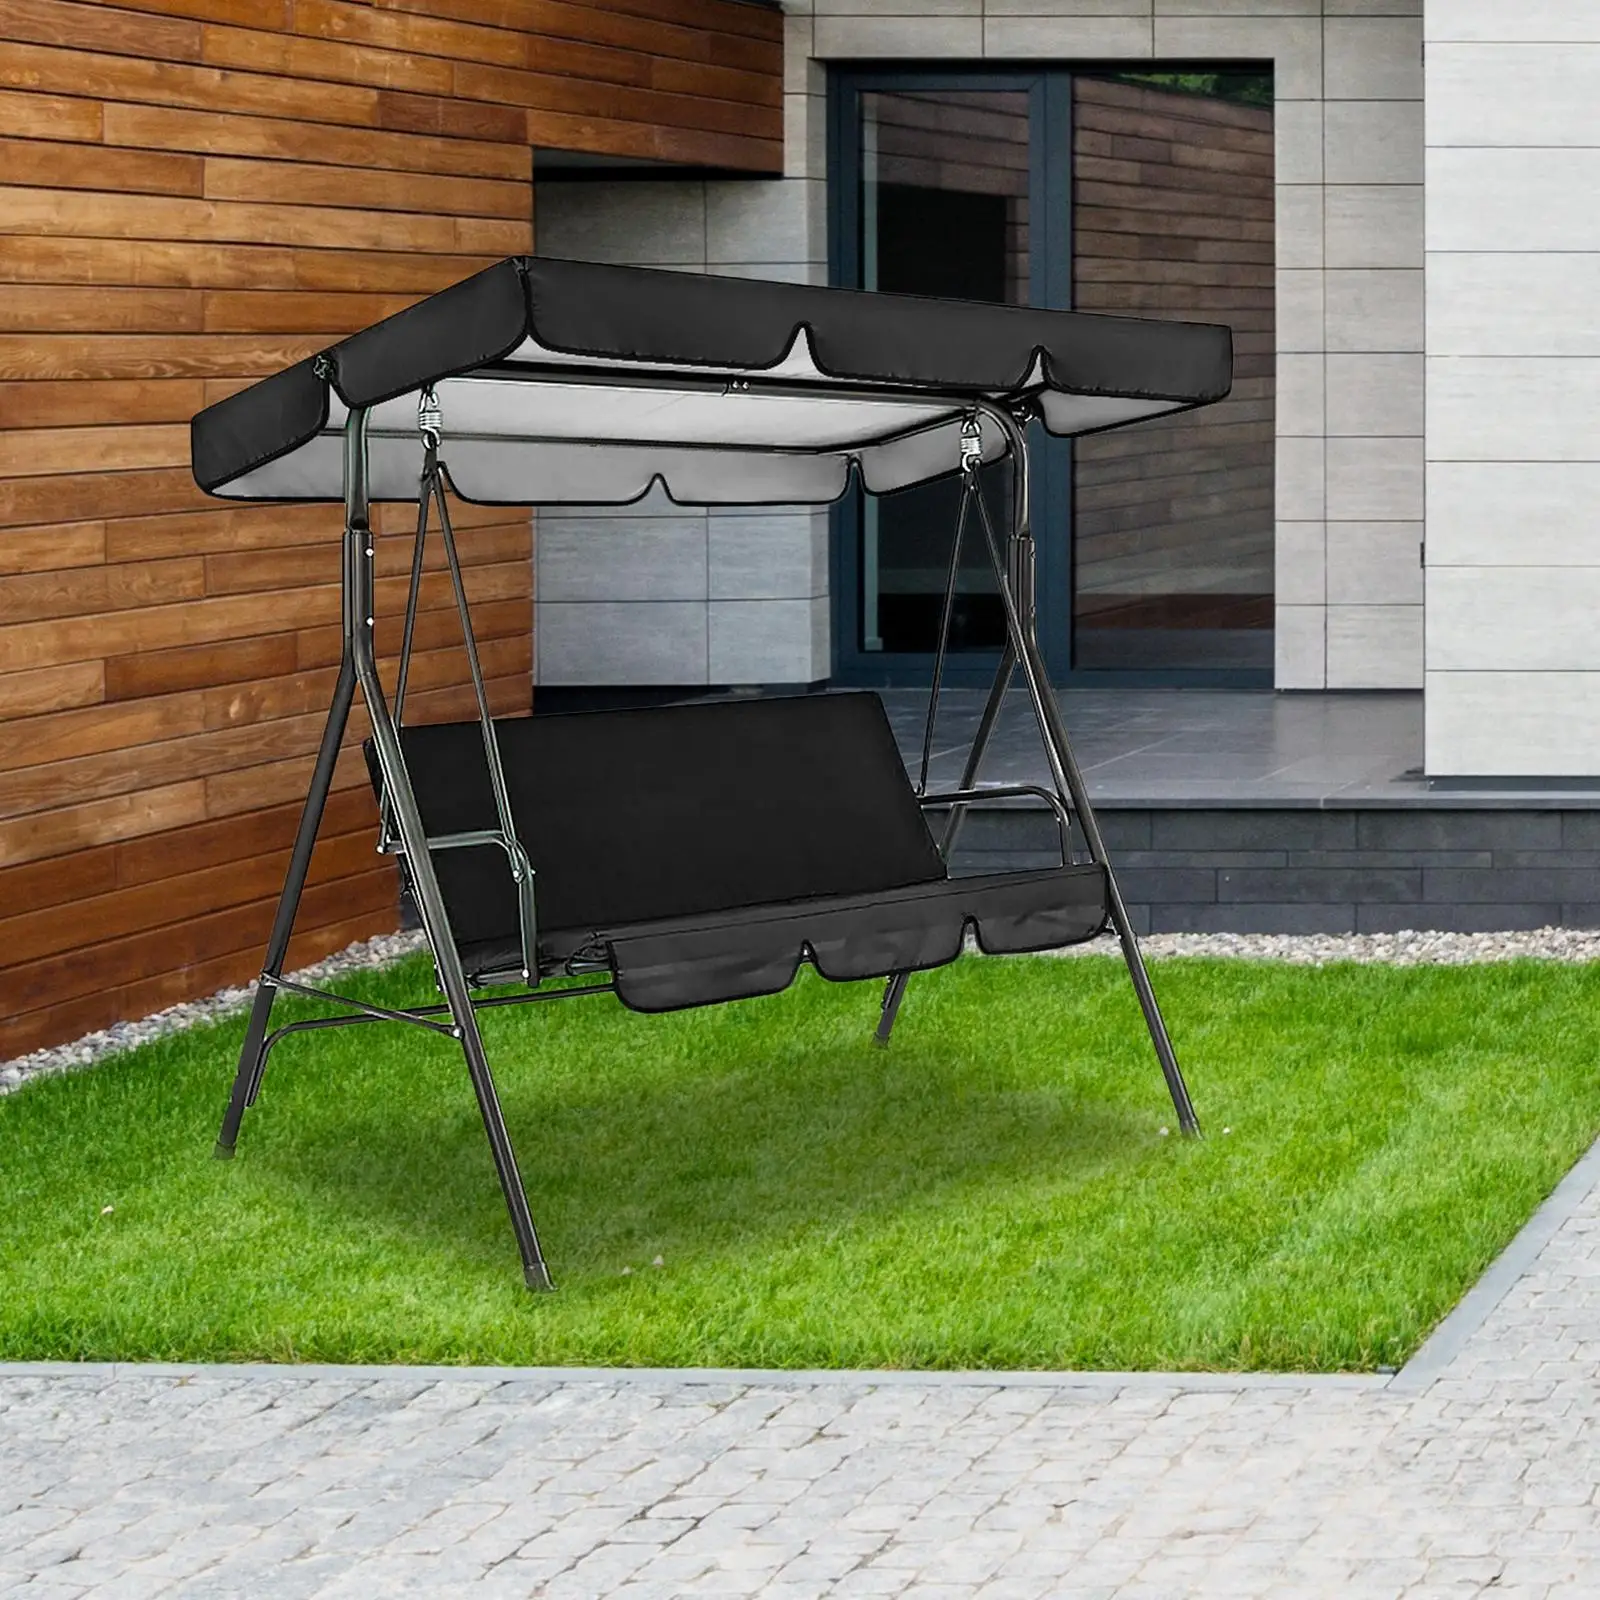 Patio Swing Canopy Rainproof Dustproof Durable Windproof Outdoor Garden Furniture Covers for Swing Porch Seat Garden Yard Patio